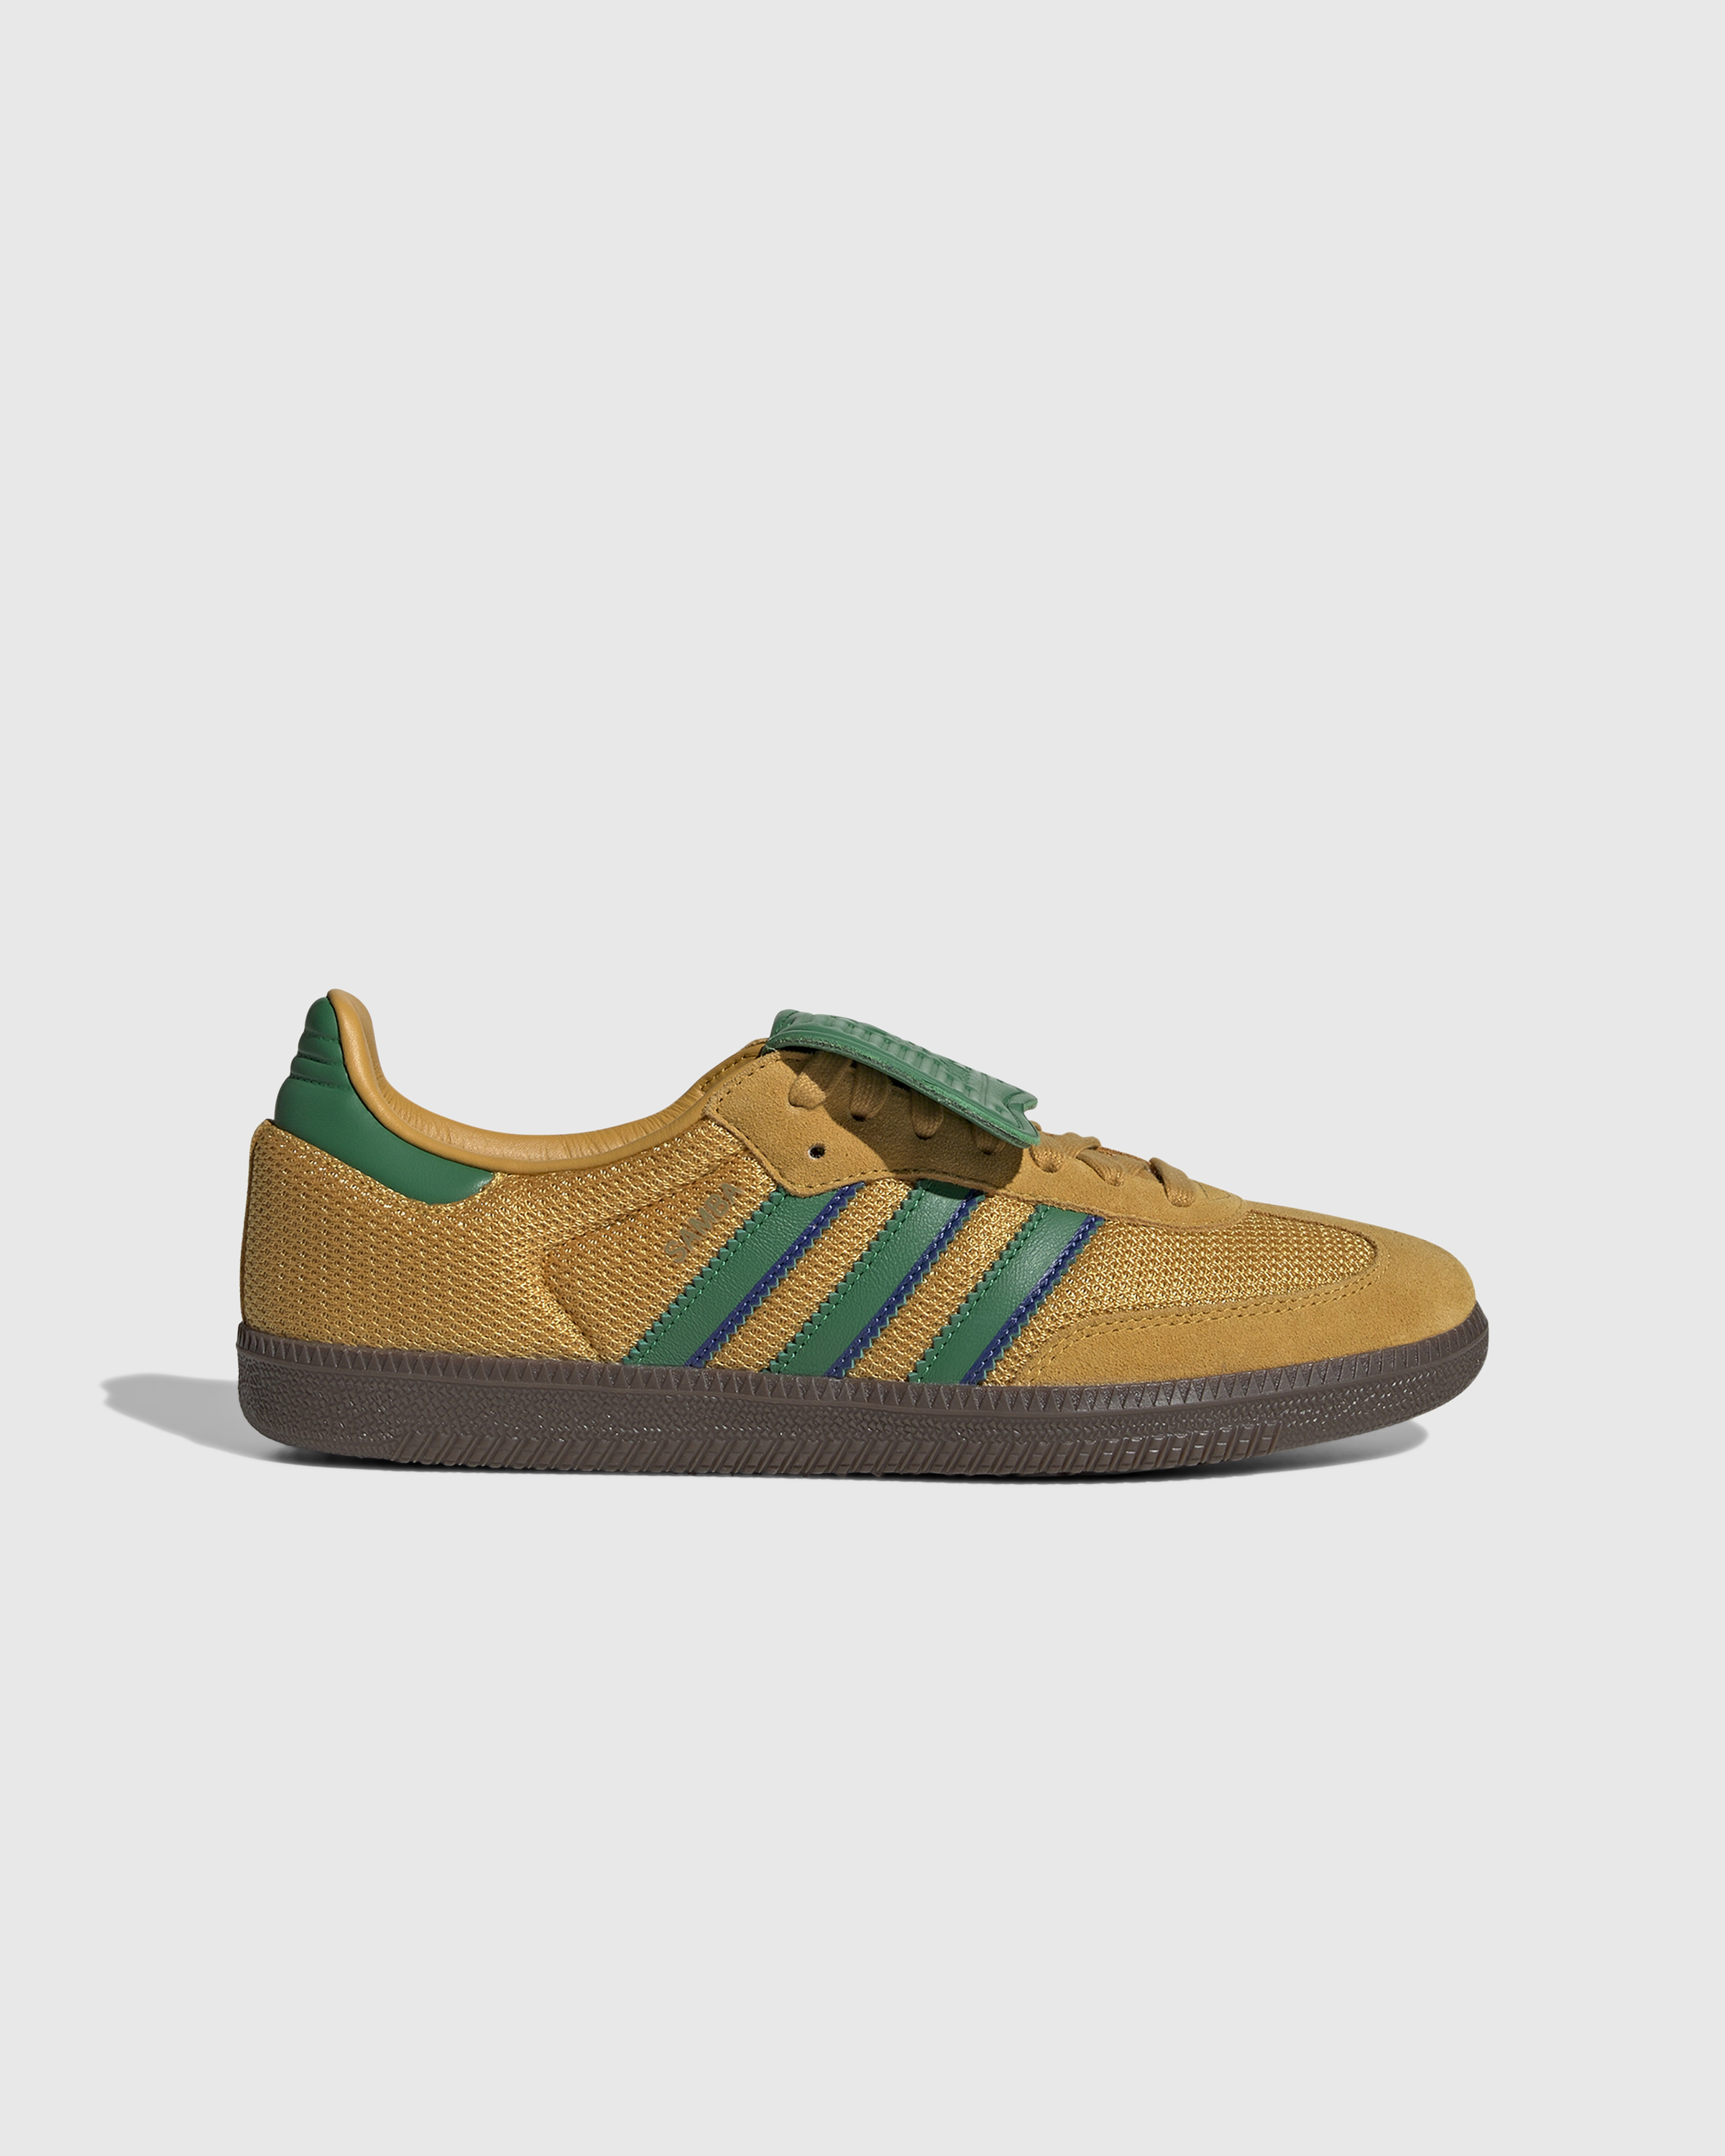 Adidas – Samba LT Preyel/Green/Gum - Low Top Sneakers - Orange - Image 1